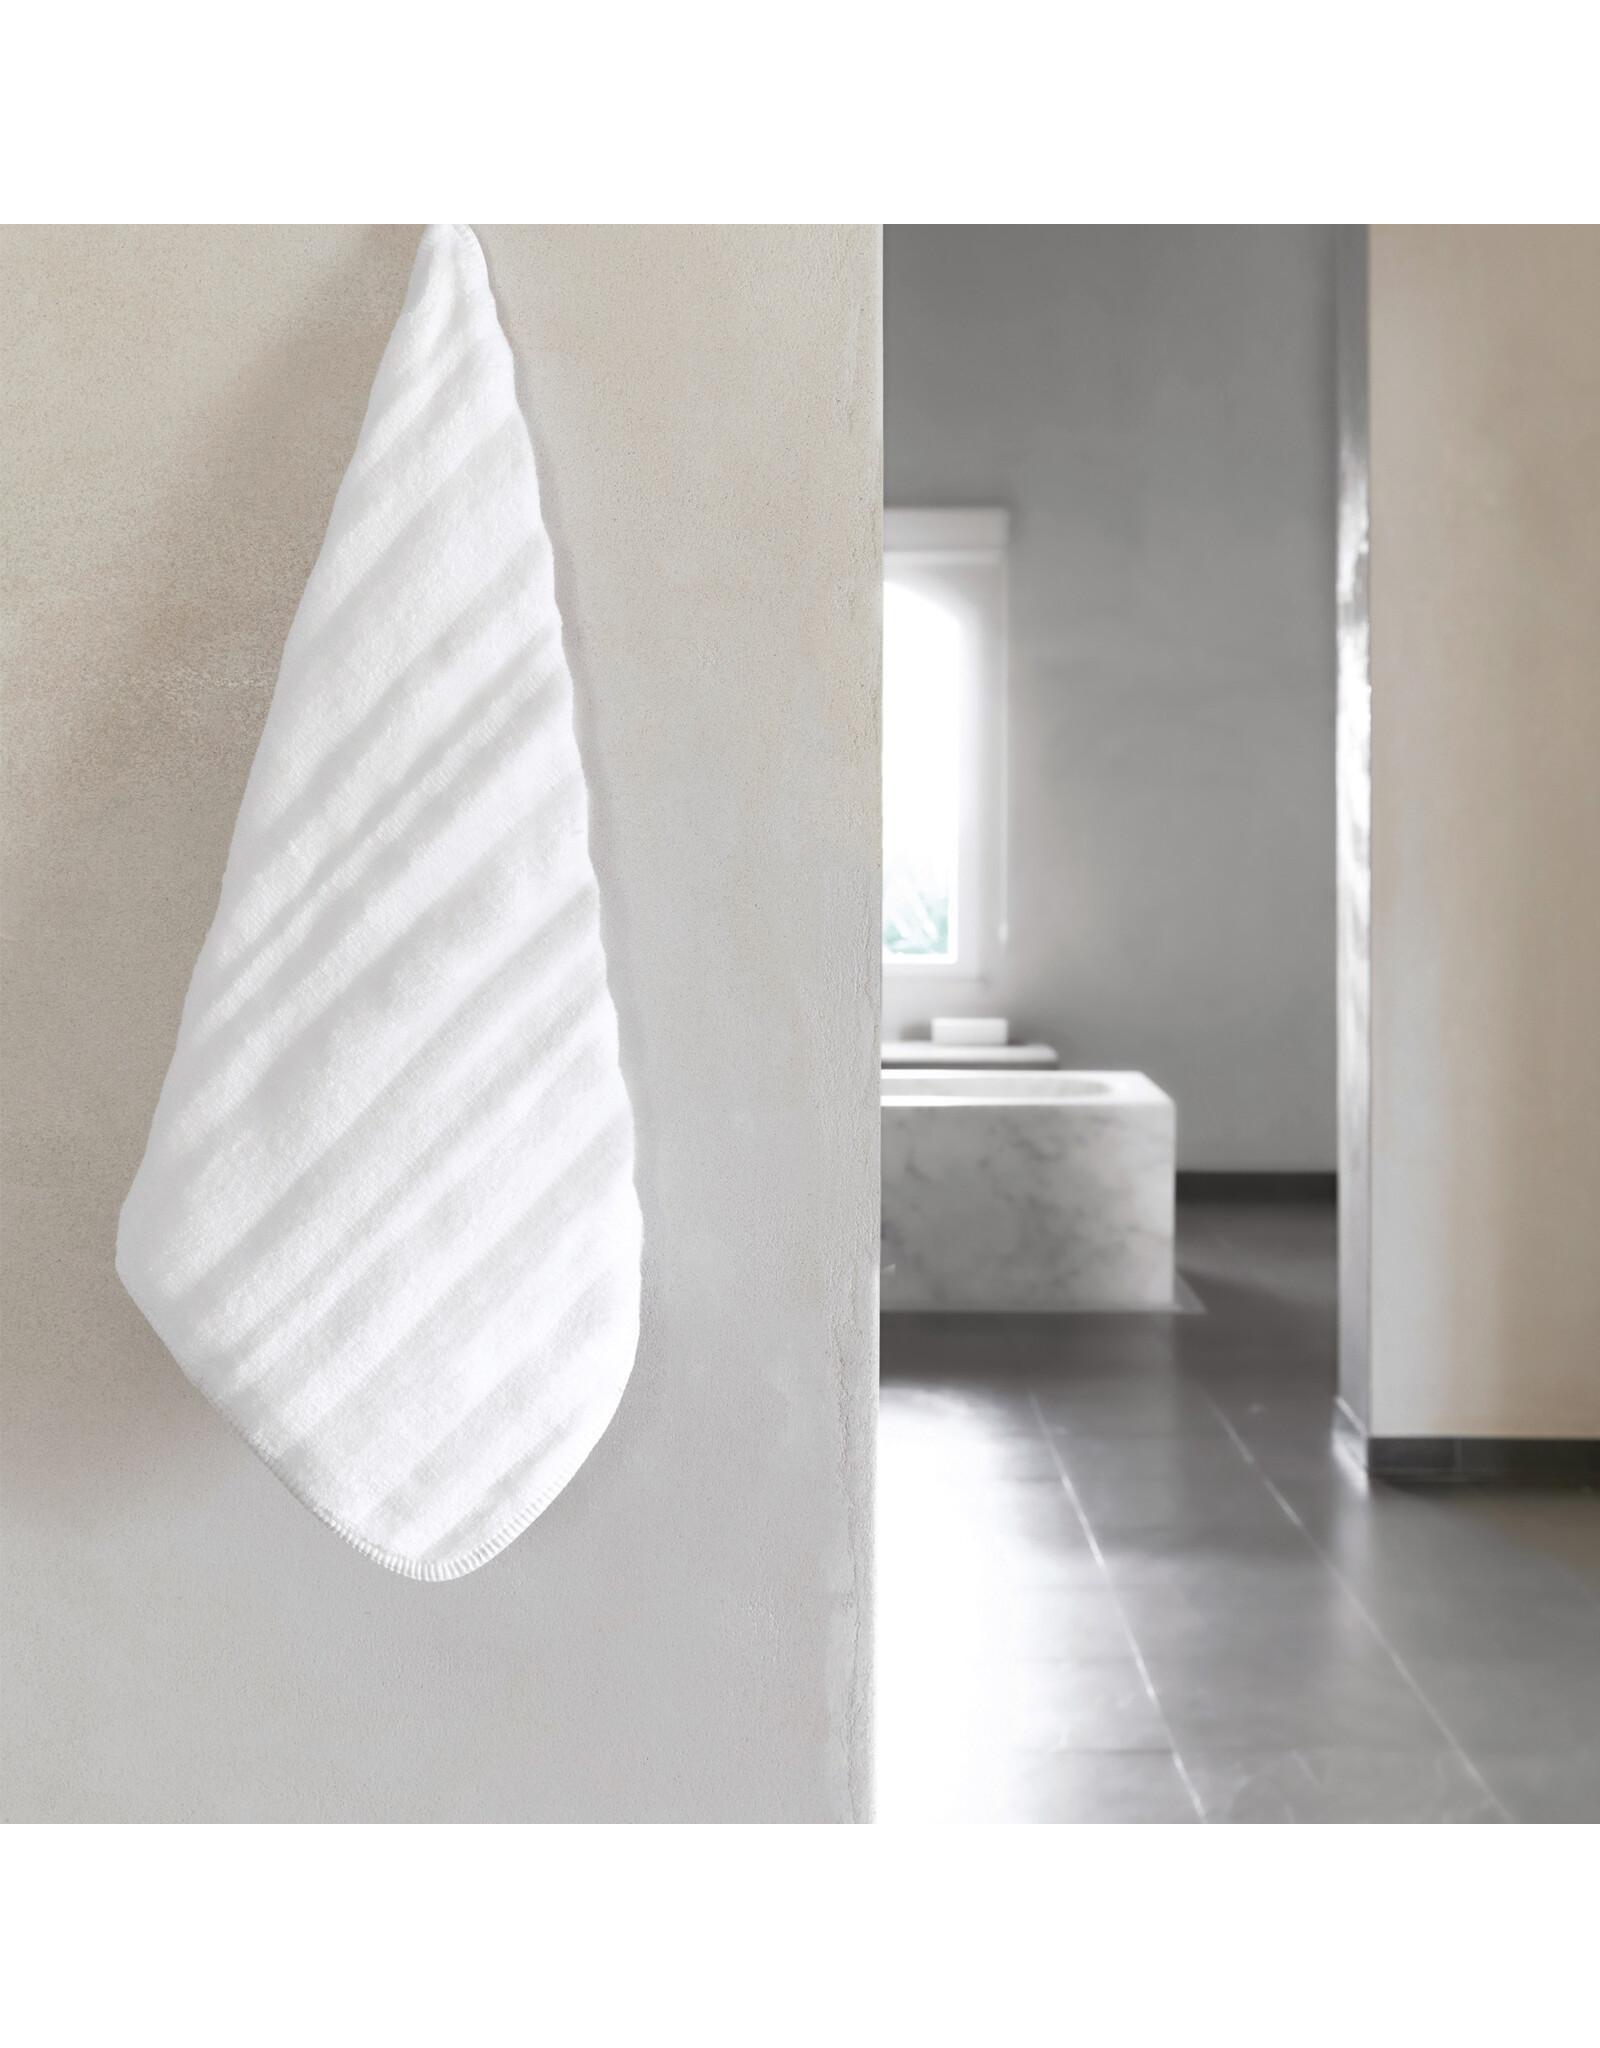 Alentejo Hand Towel, White 20 x 39